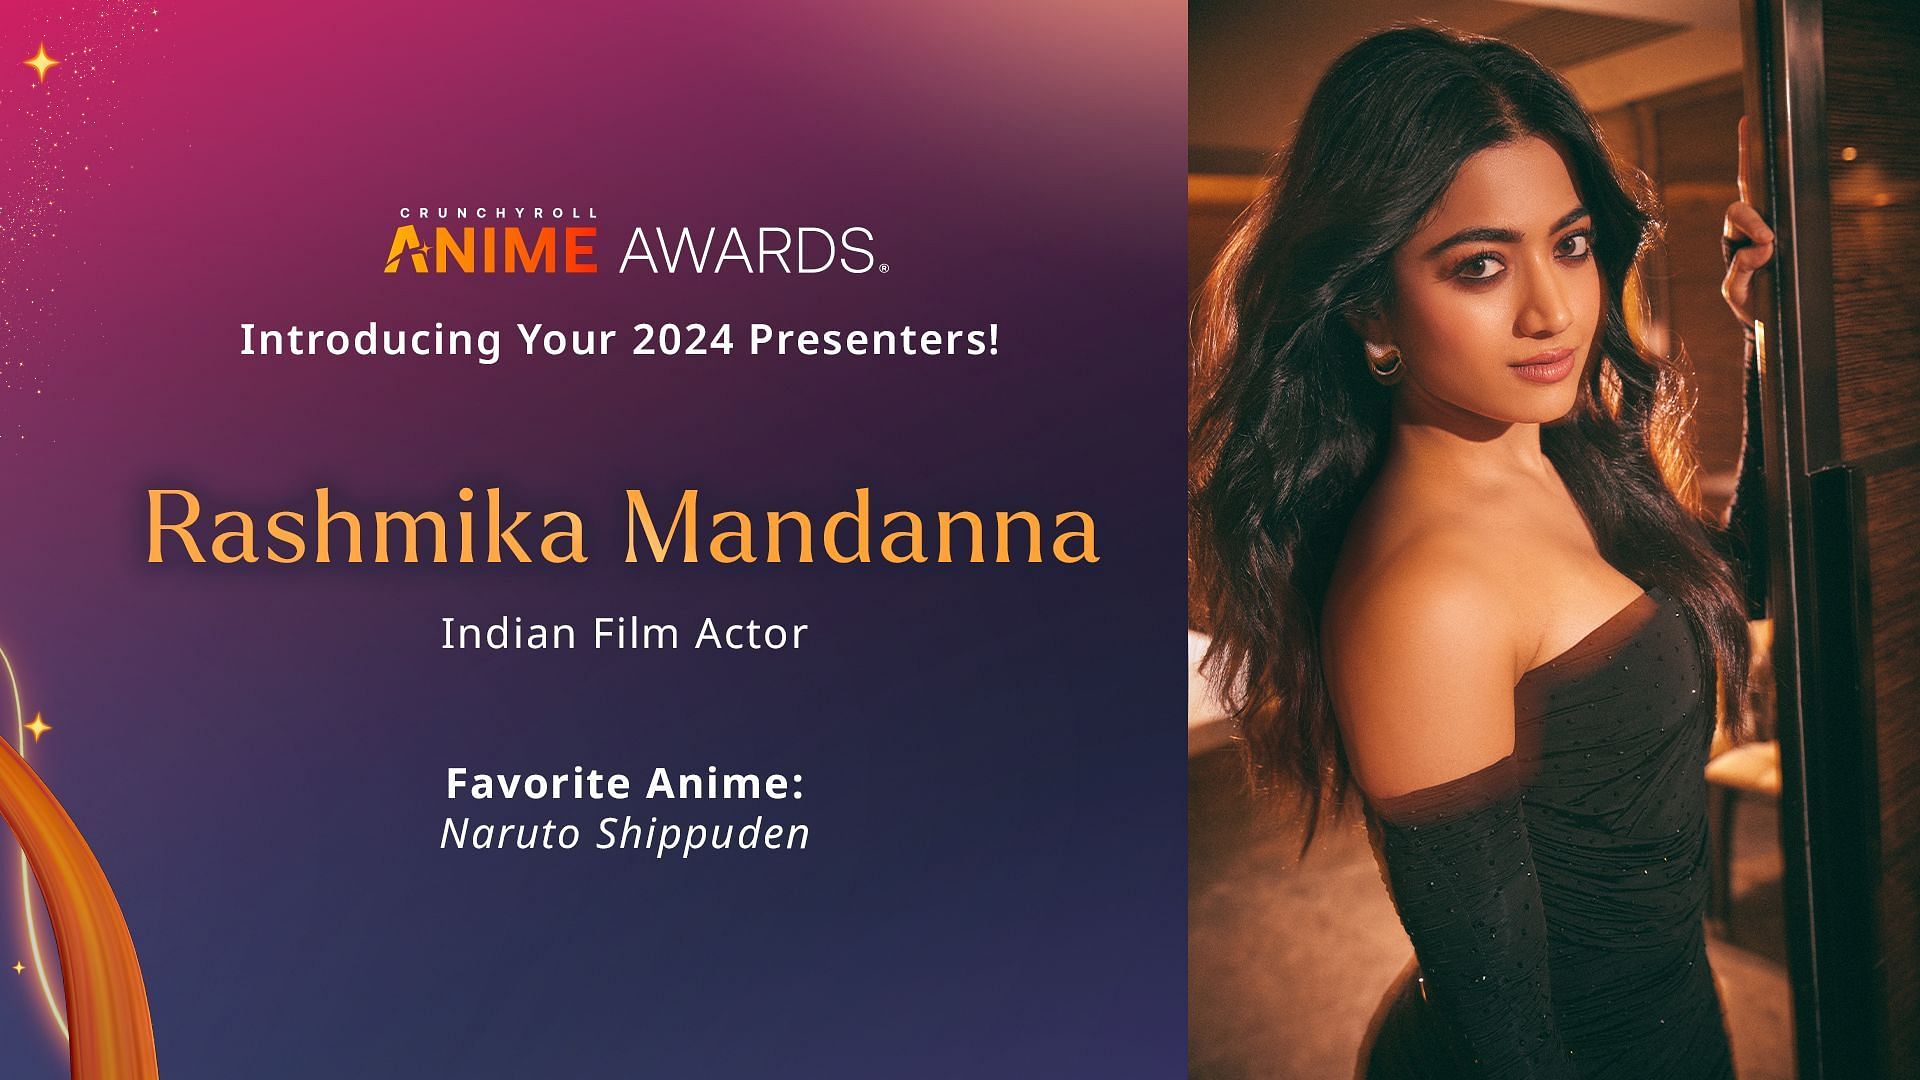 Rashmika Mandanna is set to be a presenter at the Anime Awards (Image via Crunchyroll)